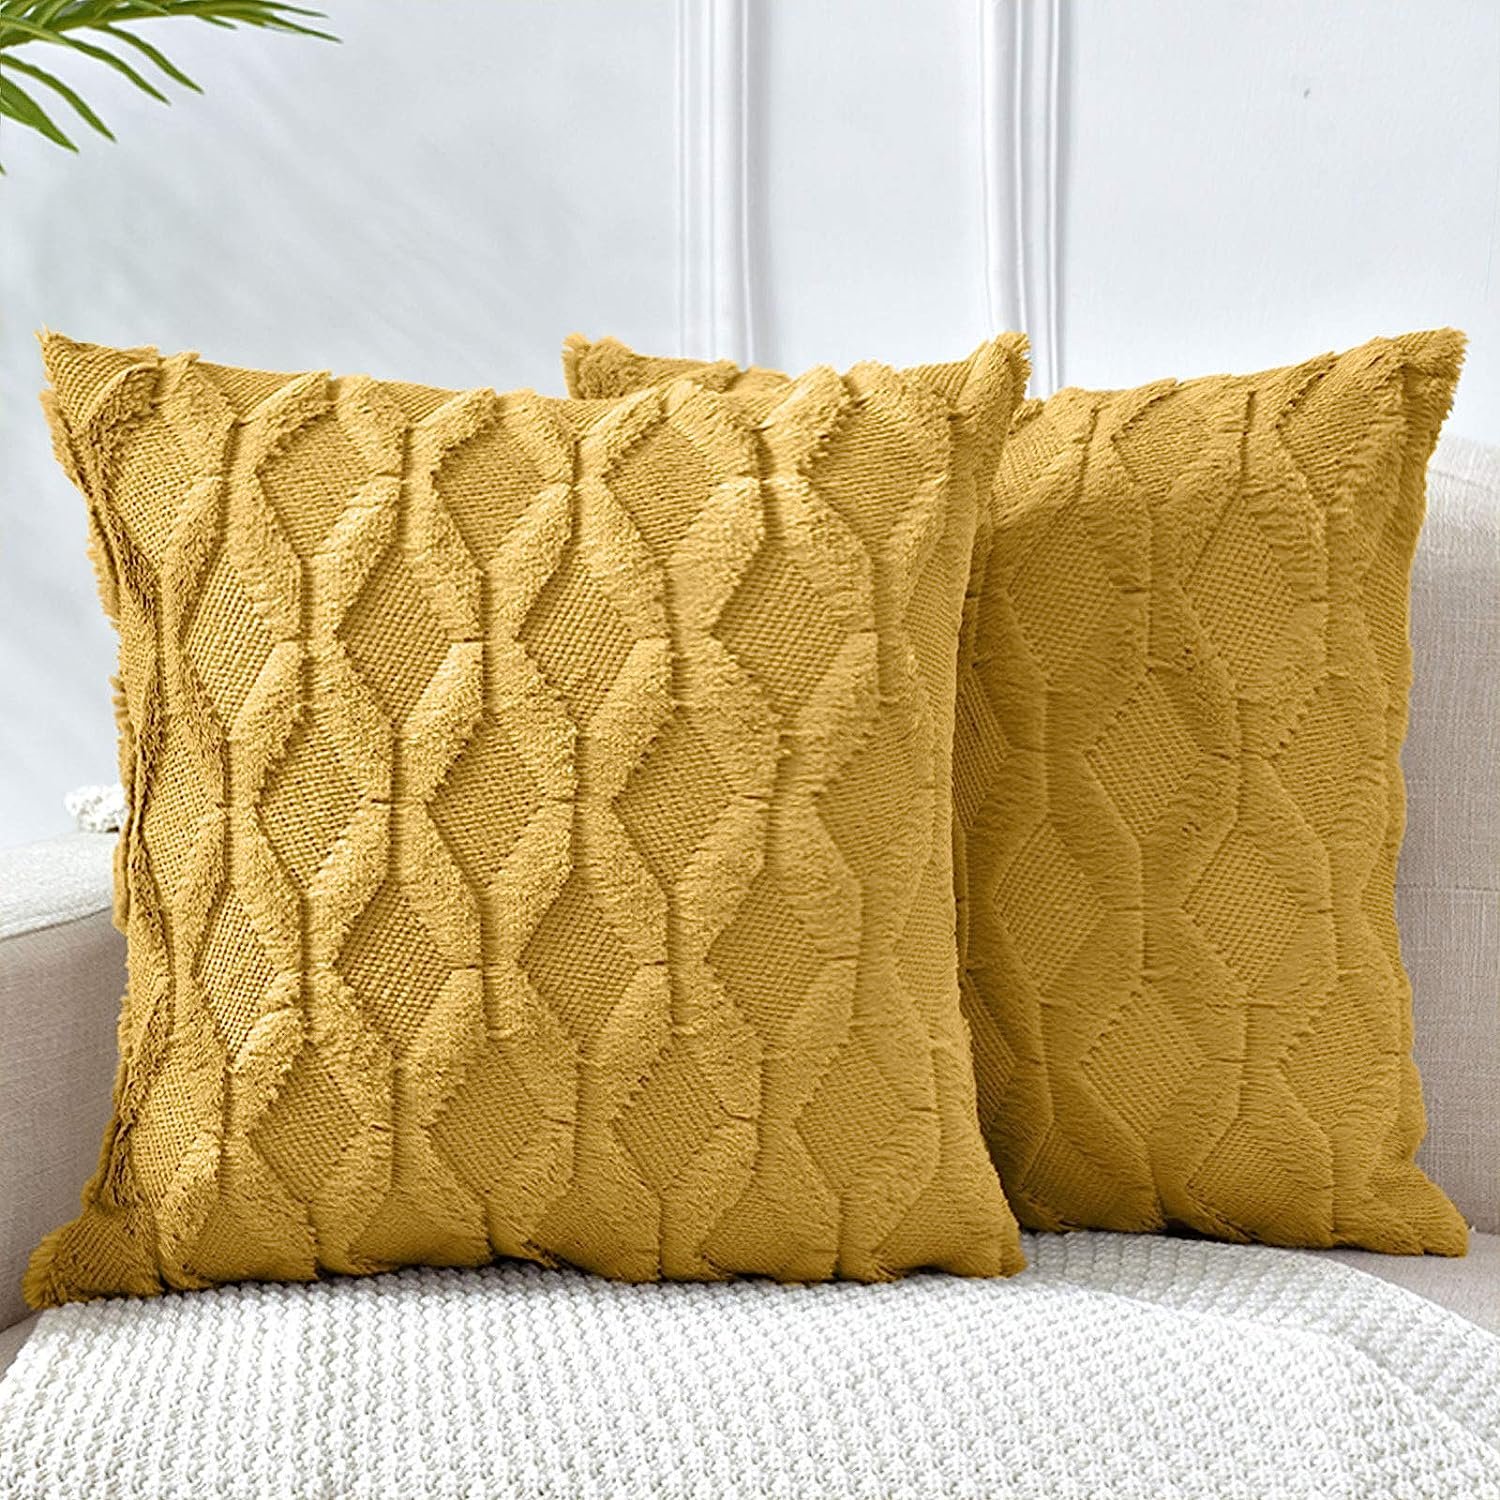 Geometric Textured Light Mustard Yellow Throw Pillow Covers 16x16.jpg